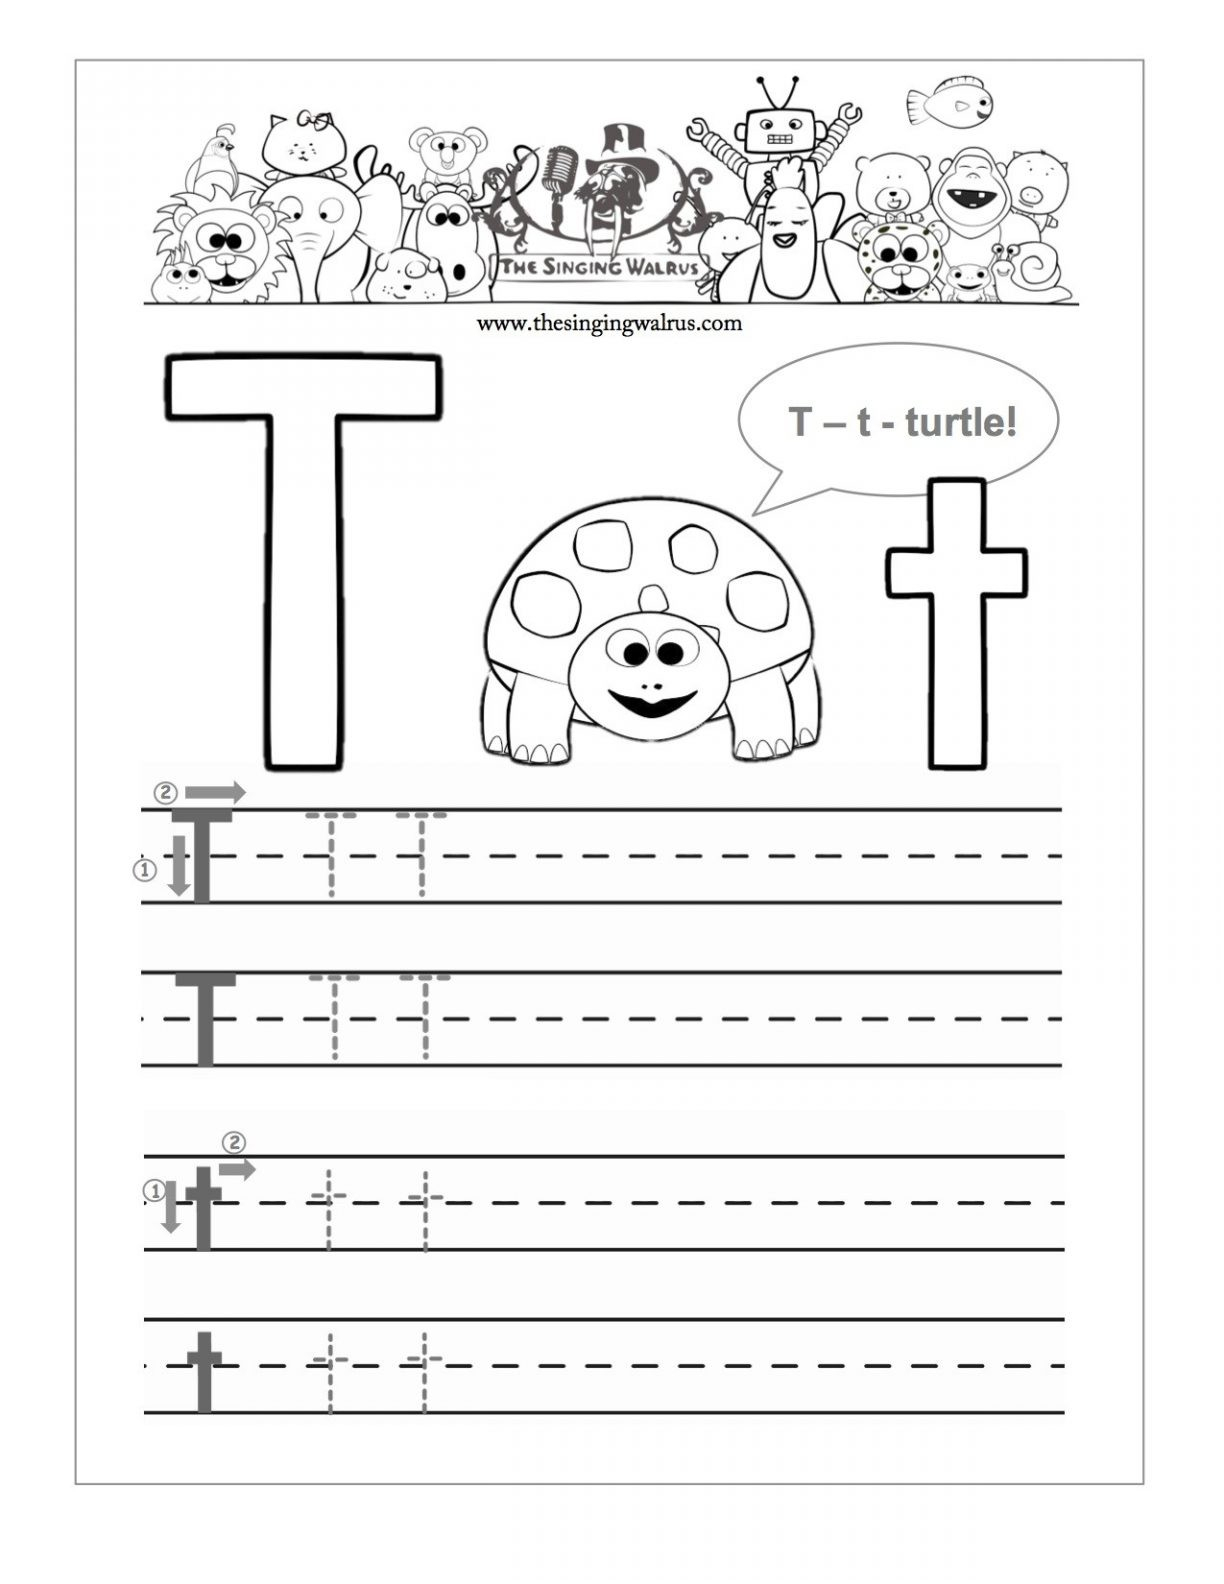 school-printable-images-gallery-category-page-7-printableecom-letter-t-kindergarten-worksheet